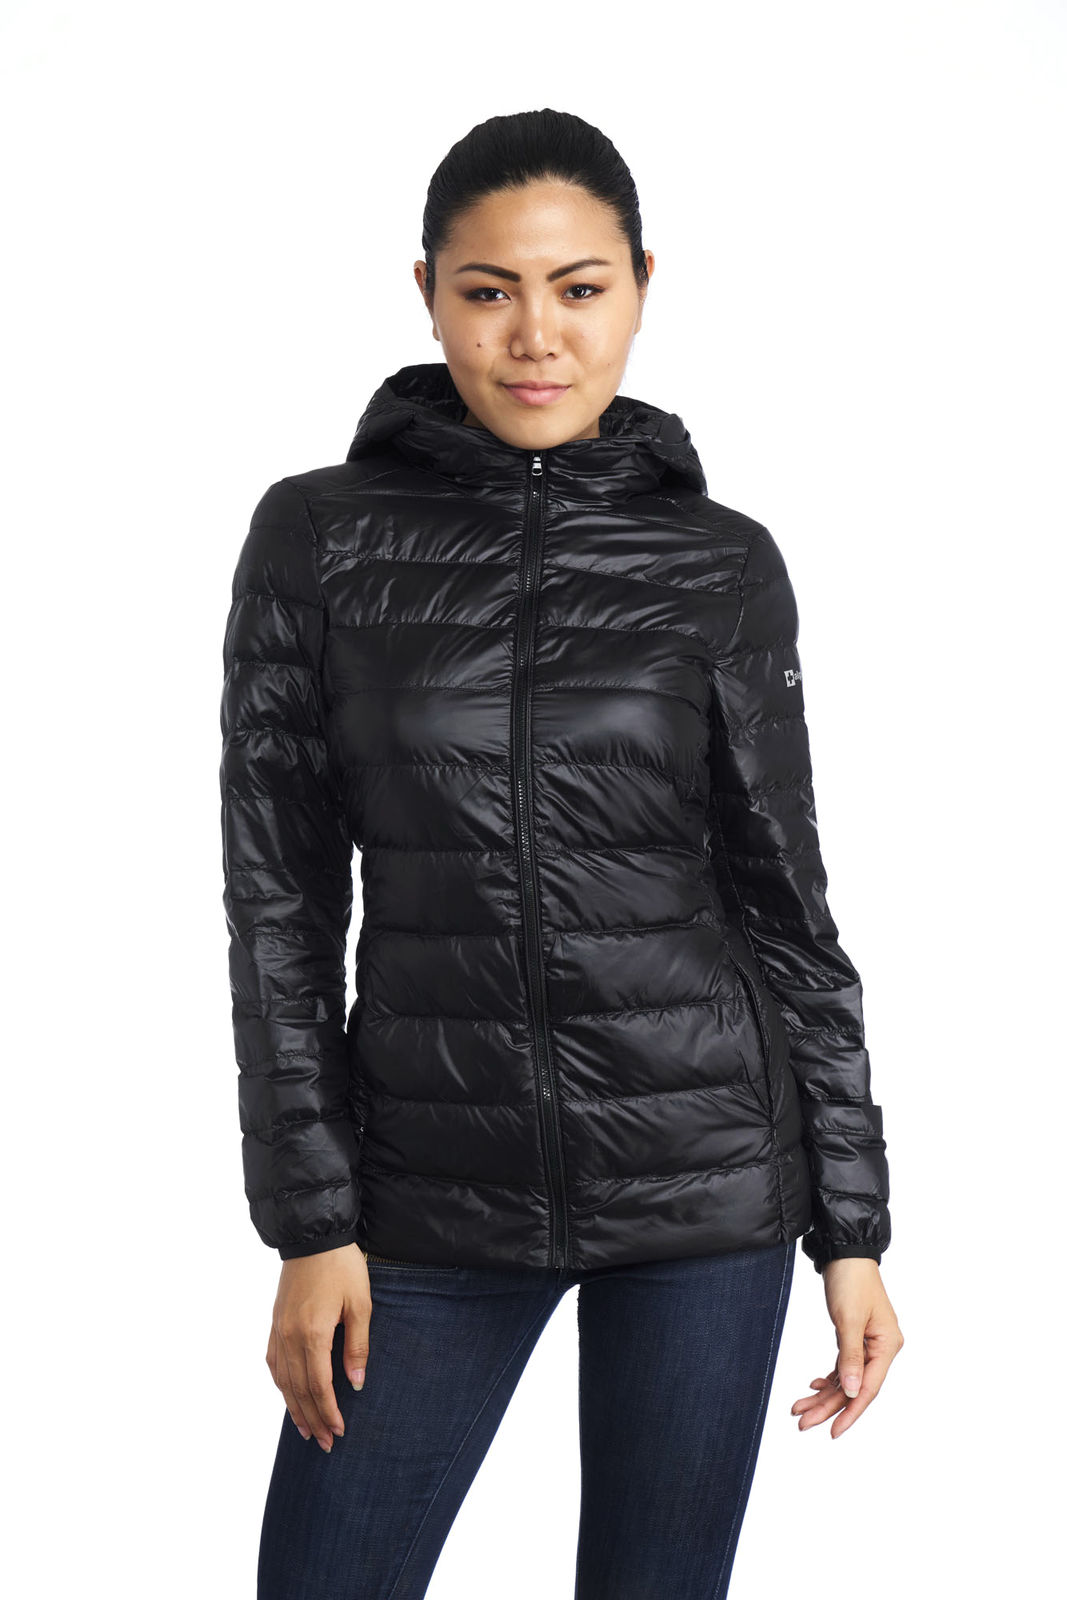 Alpine Swiss women's hooded puffer jacket for $30, free shipping ...